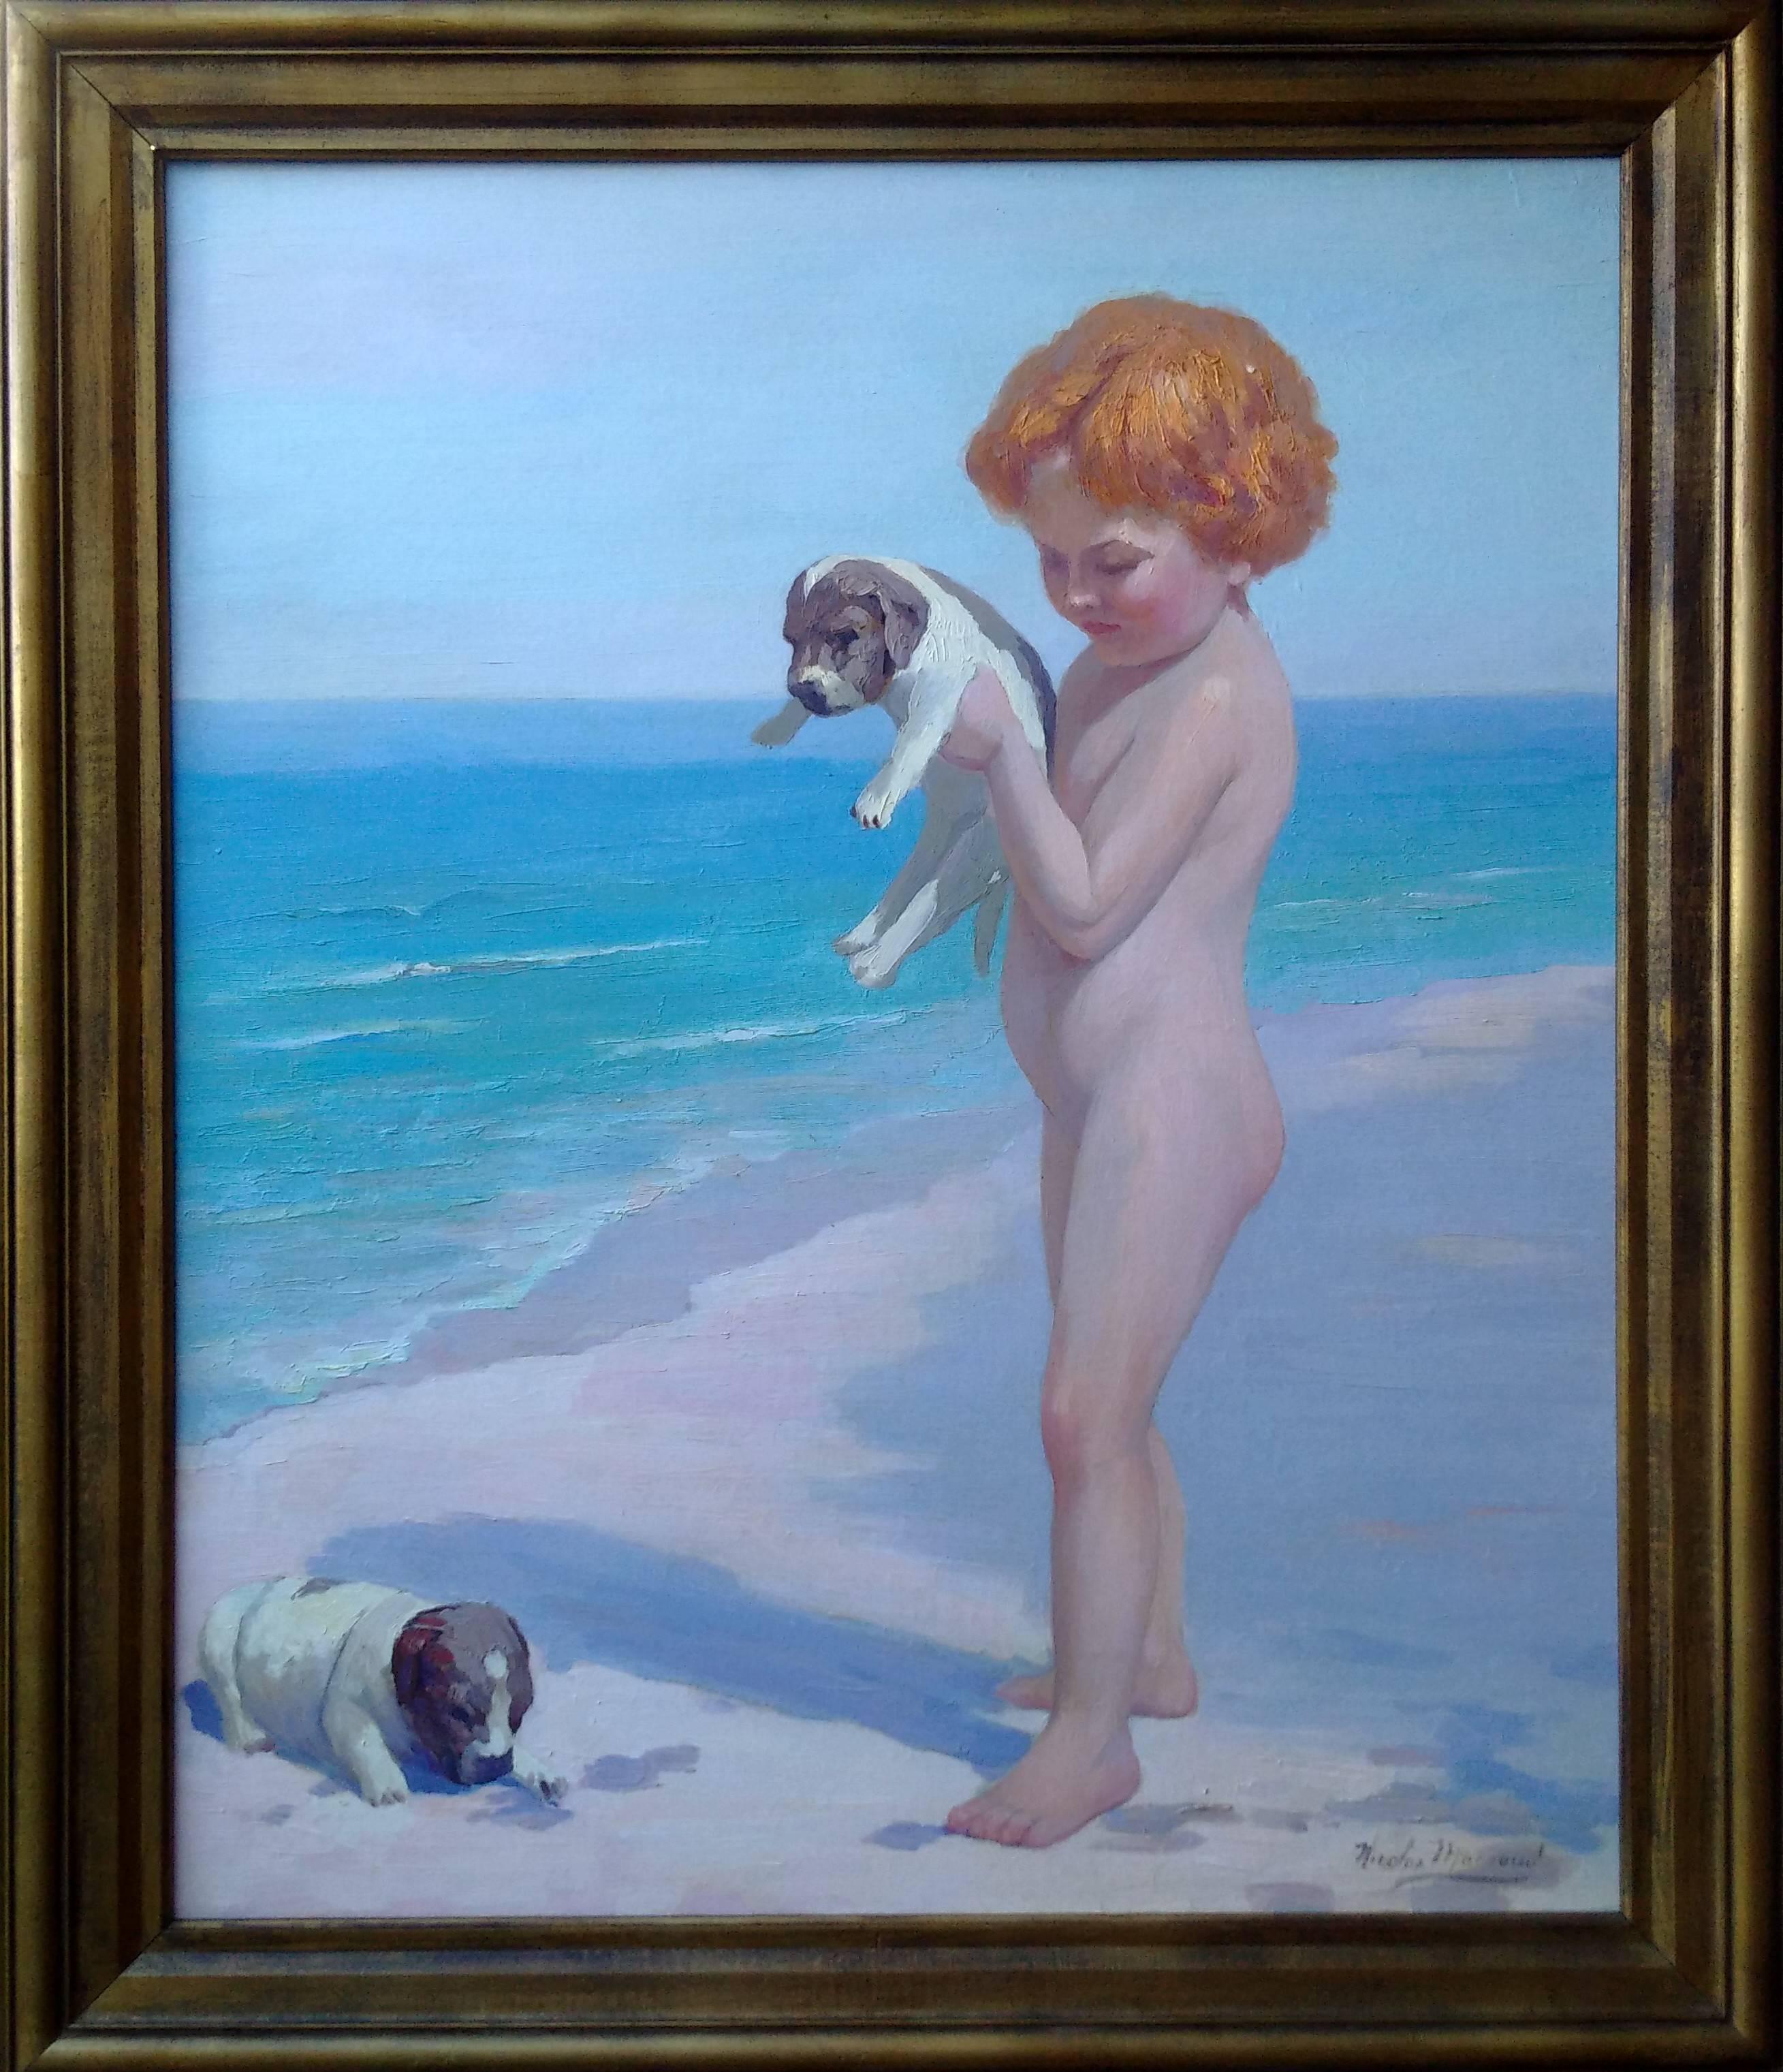 Nicholas Saleem Macsoud Portrait Painting - Child and Baby Dogs on the Beach by Nicolas-Saleem Macsoud